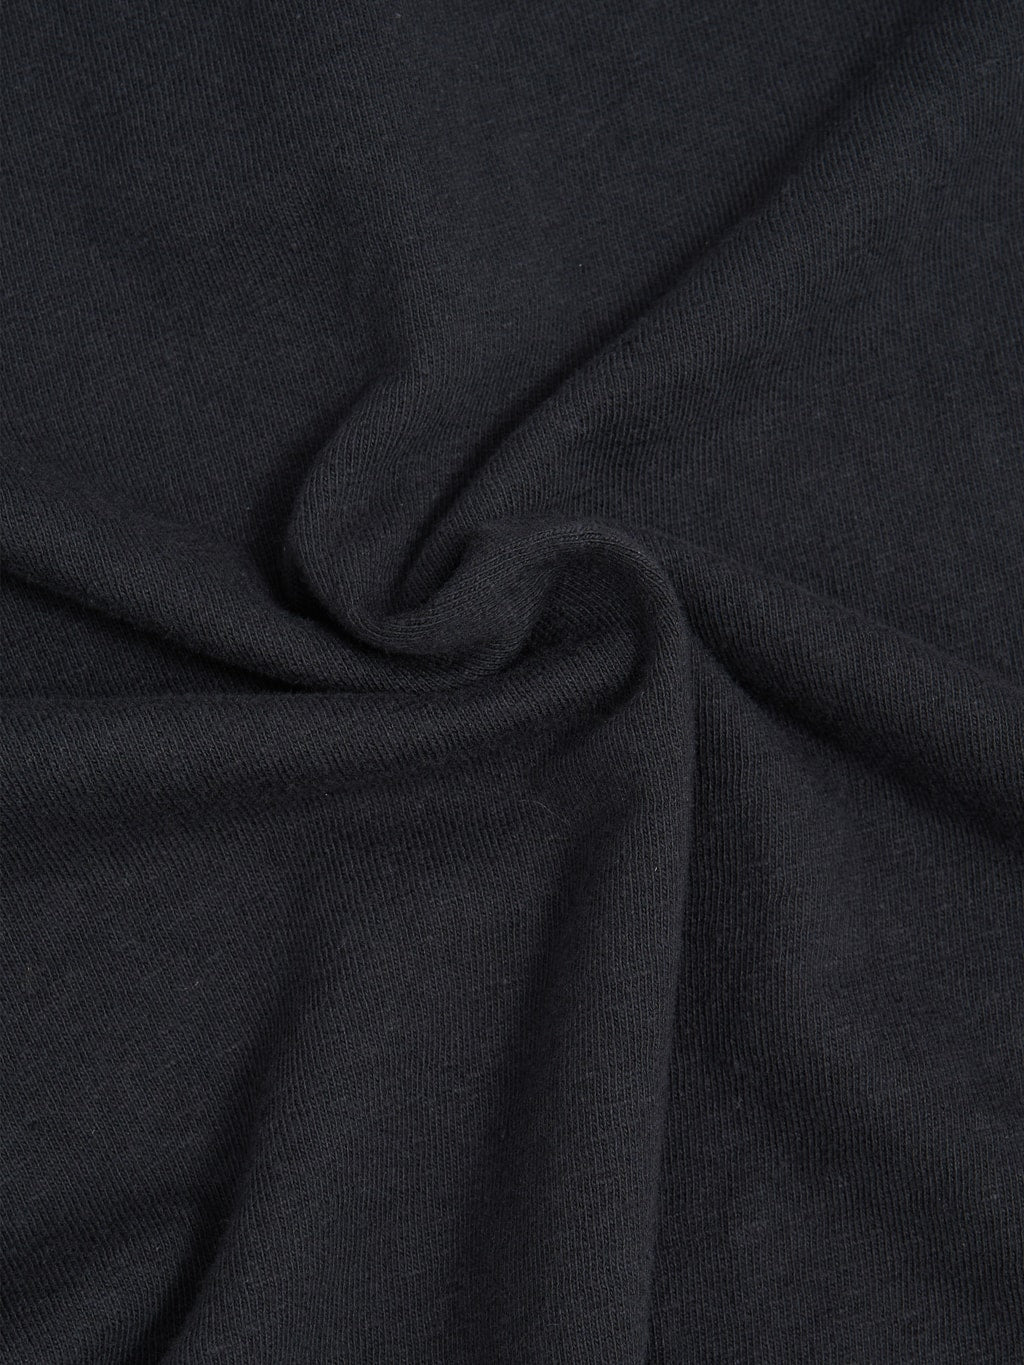 Samurai jeans crew neck tubular tshirt black cotton fabric